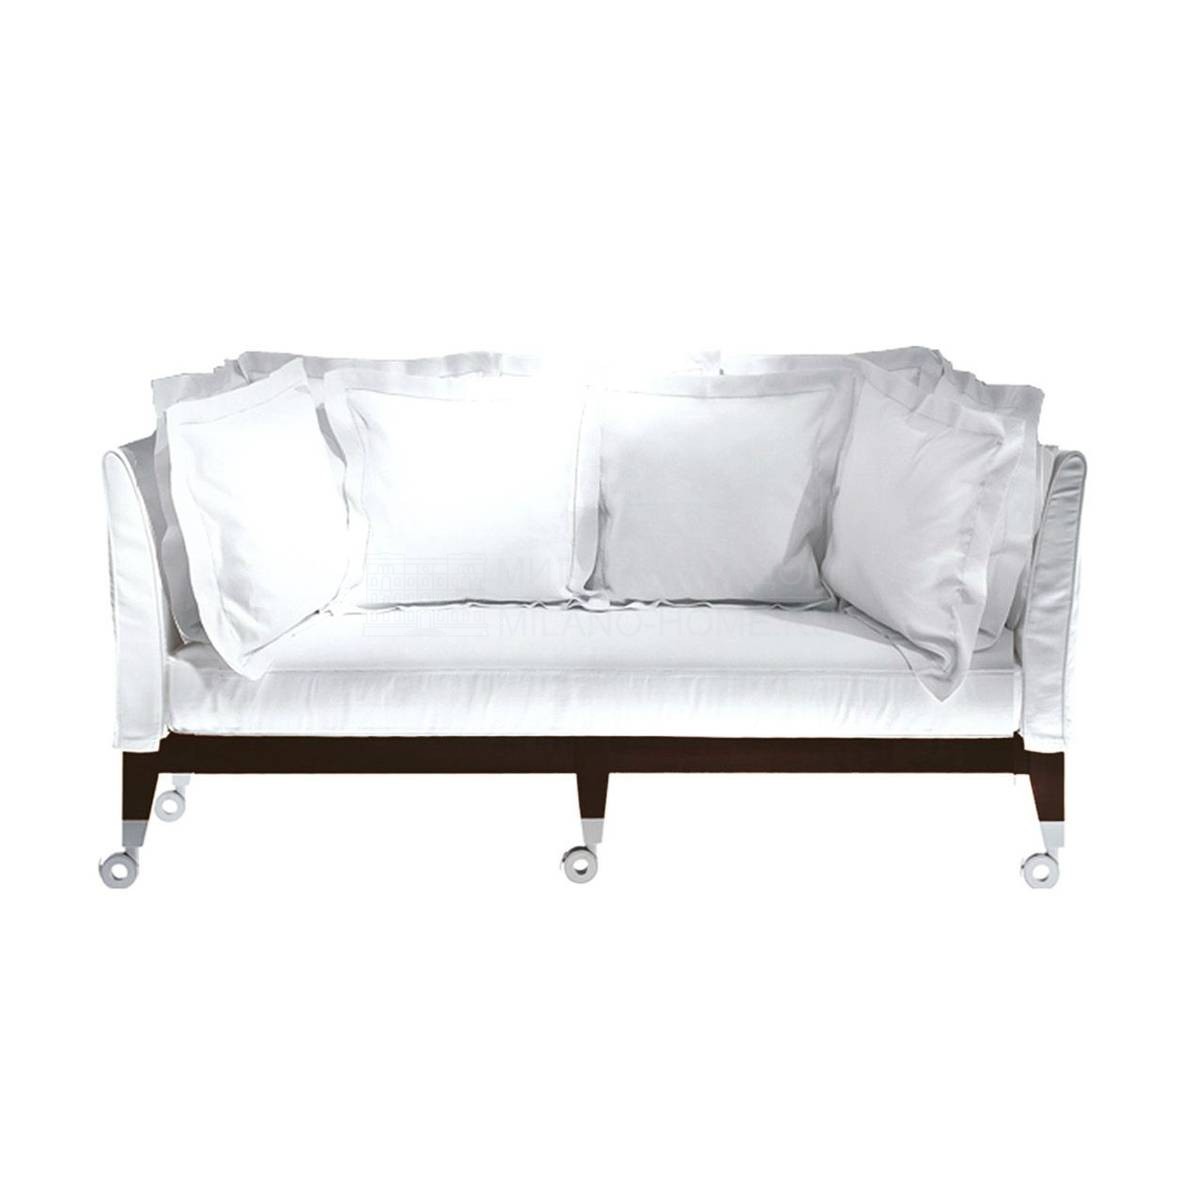 Прямой диван Neoz sofa из Италии фабрики DRIADE